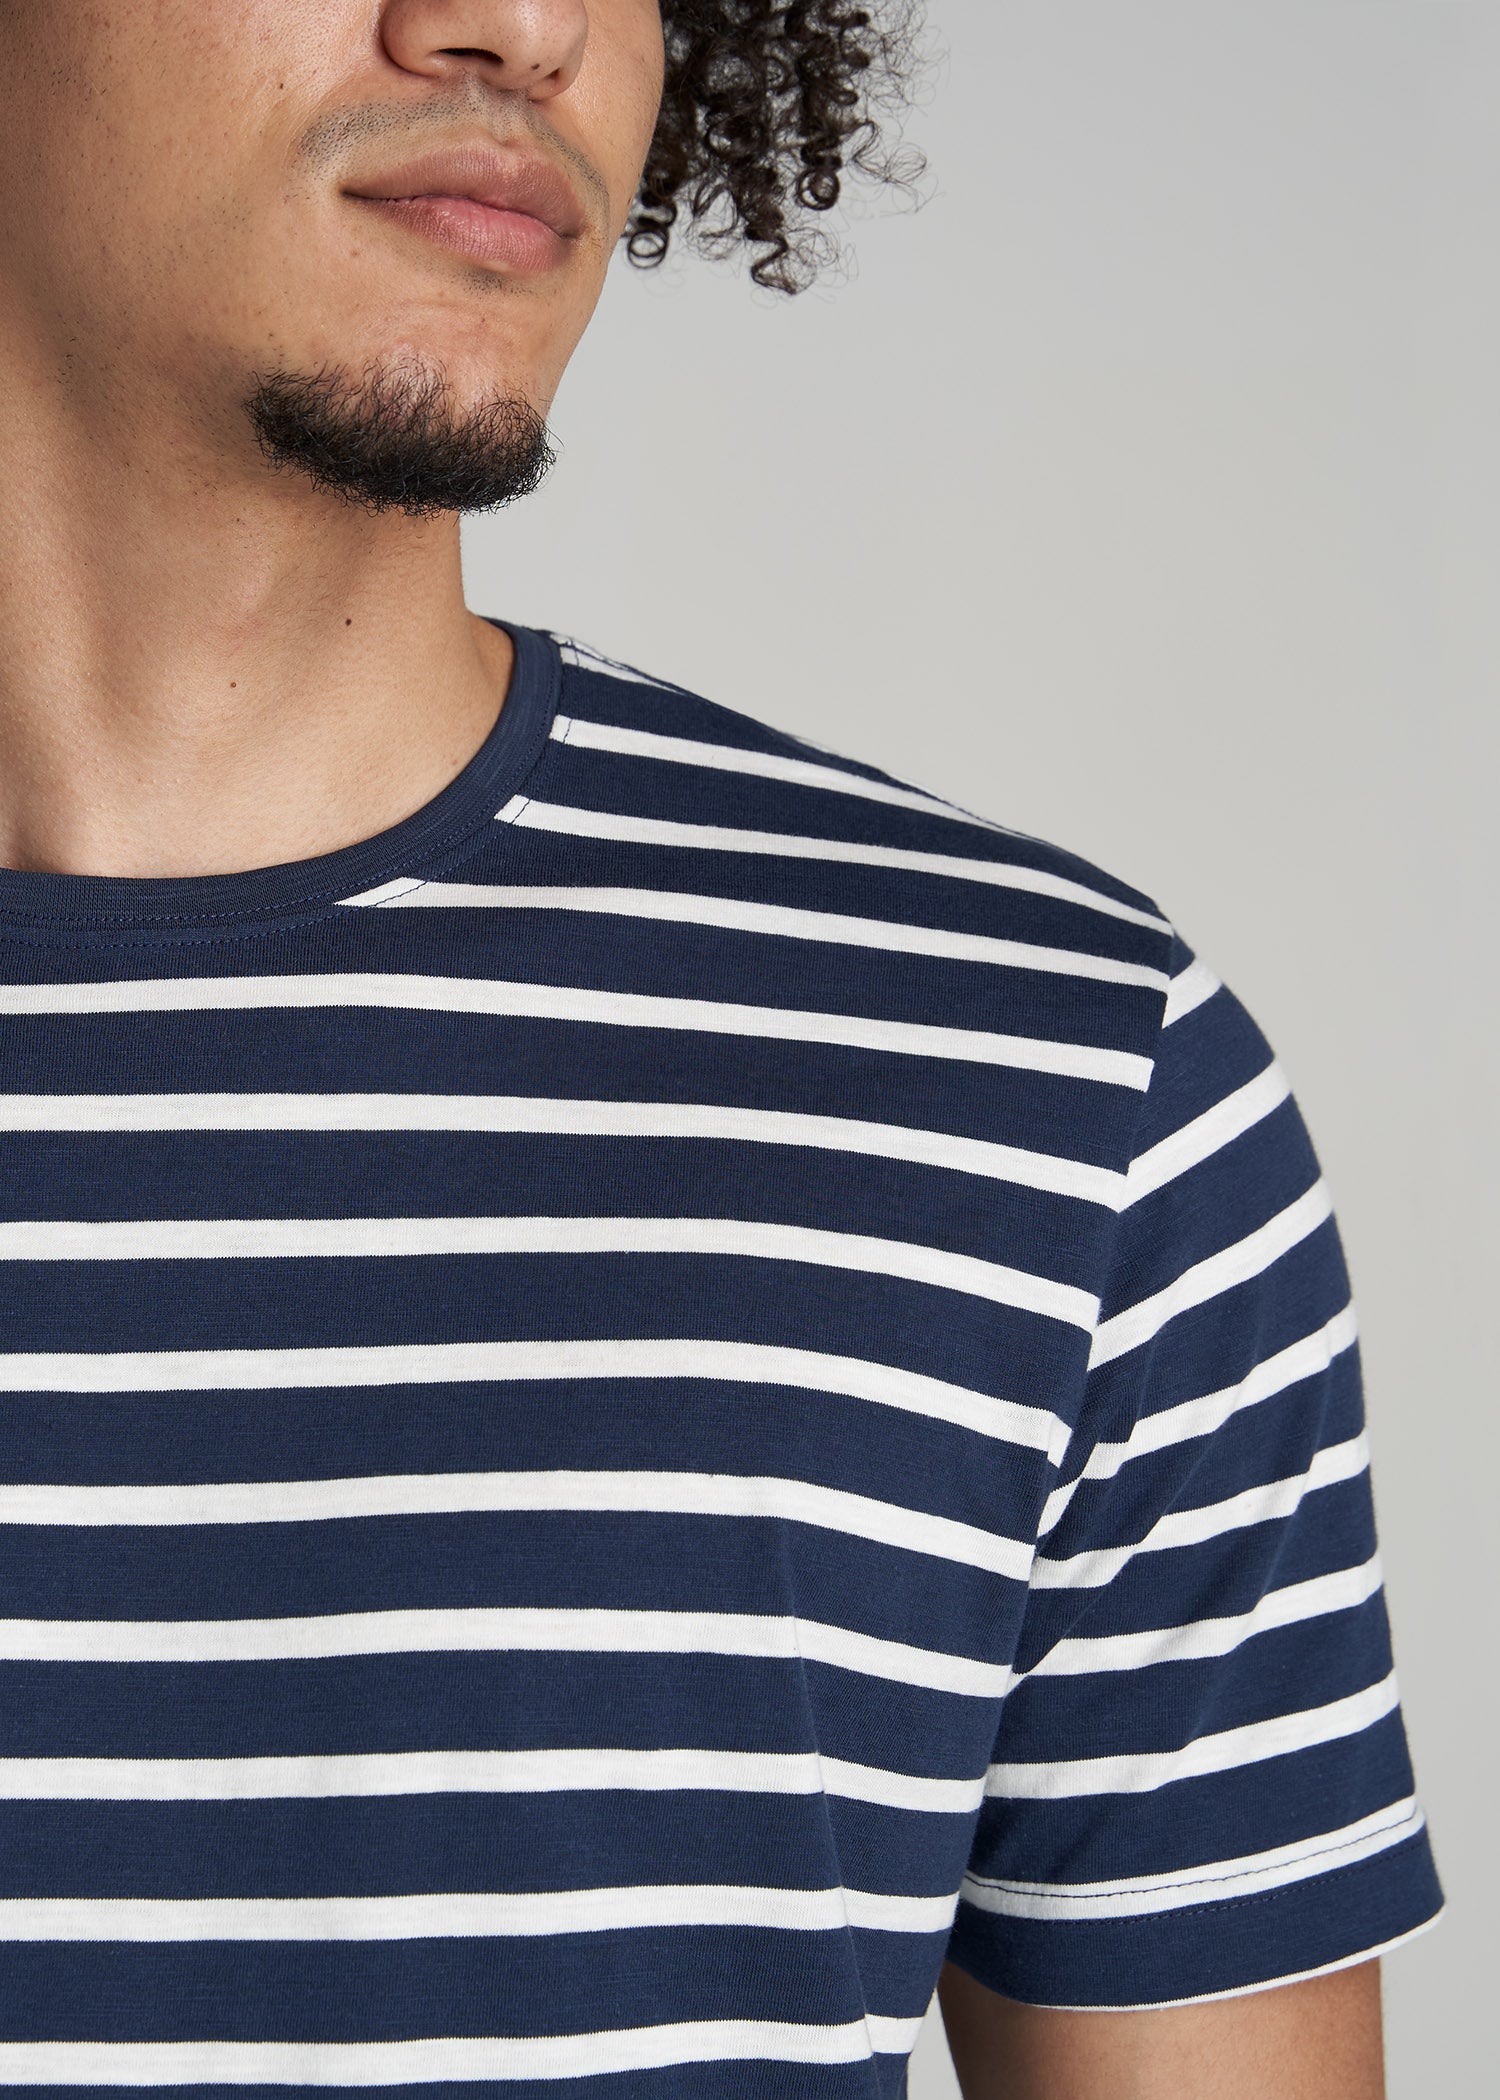    American-Tall-Men-Striped-Tee-Navy-White-Stripe-detail